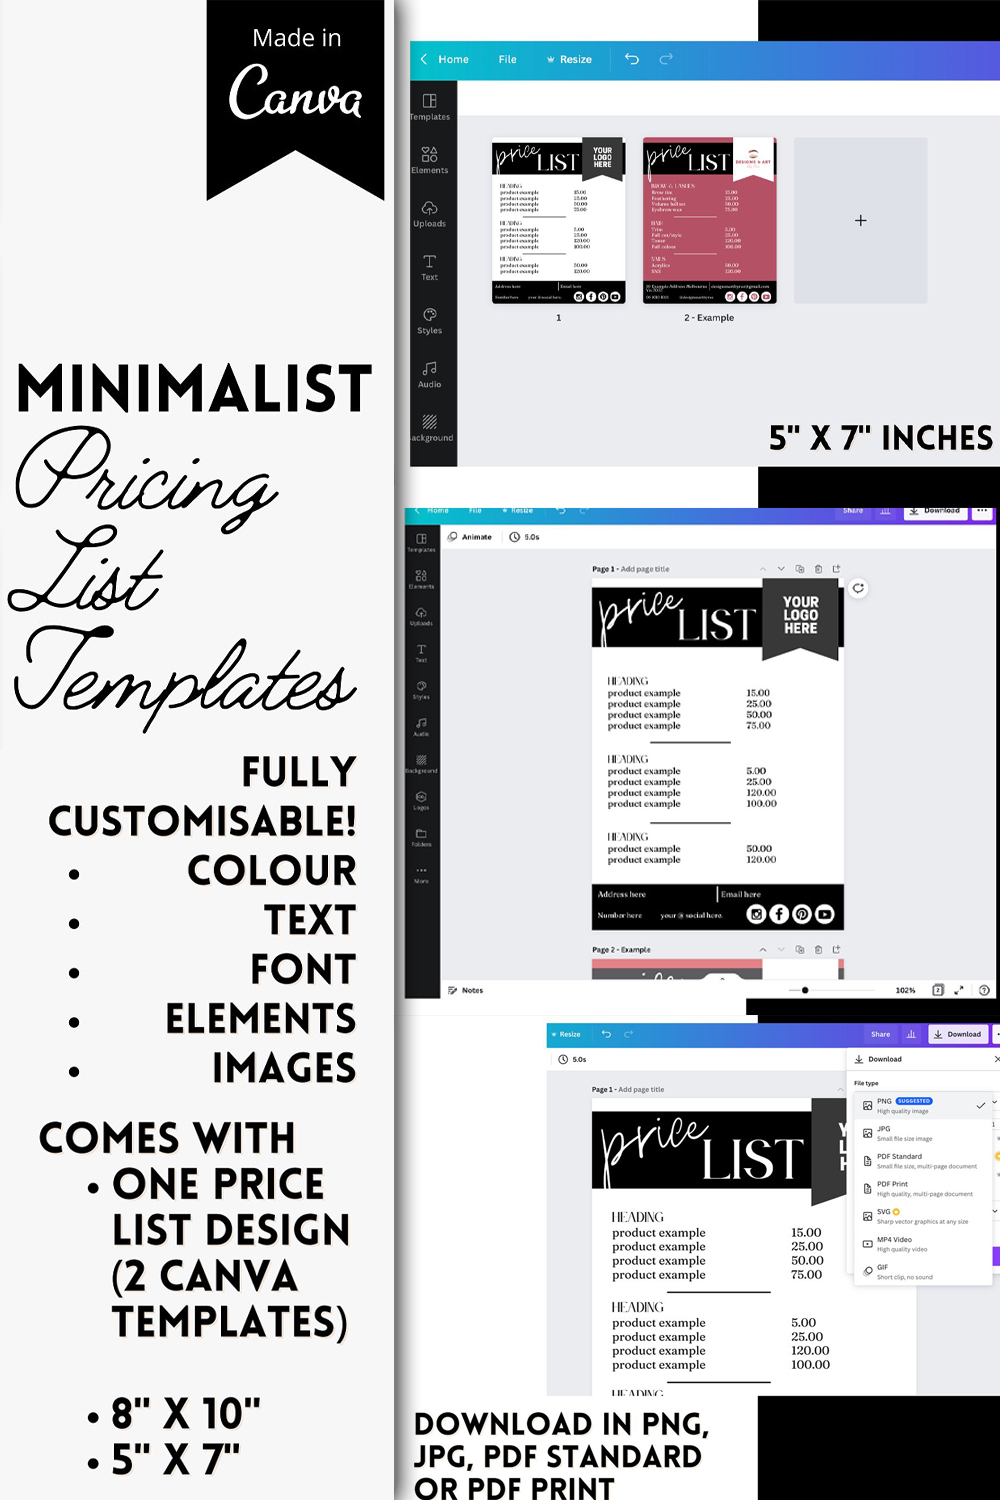 Minimalist pricing list template of pinterest.